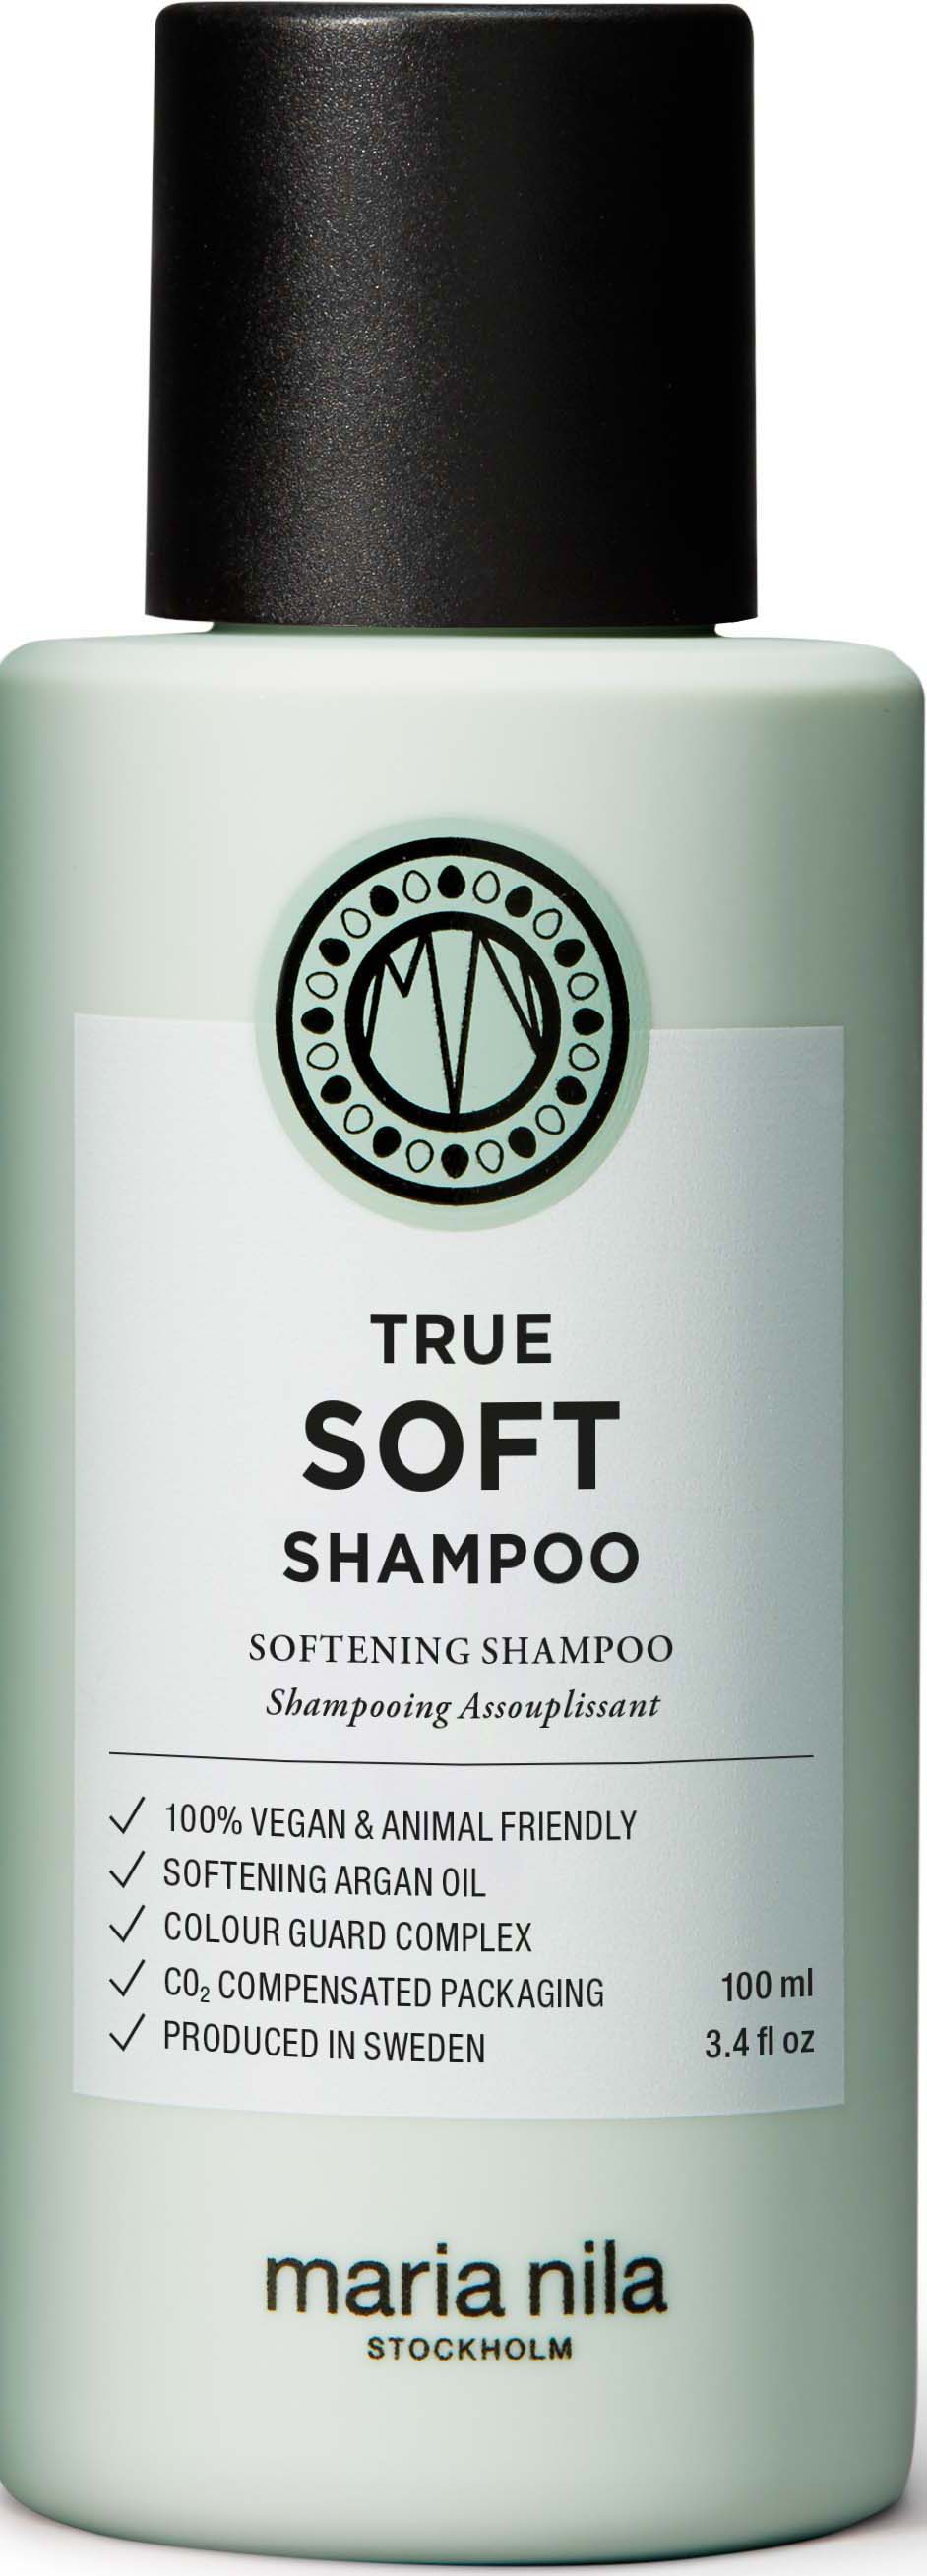 Maria Nila Palett True Soft Shampoo